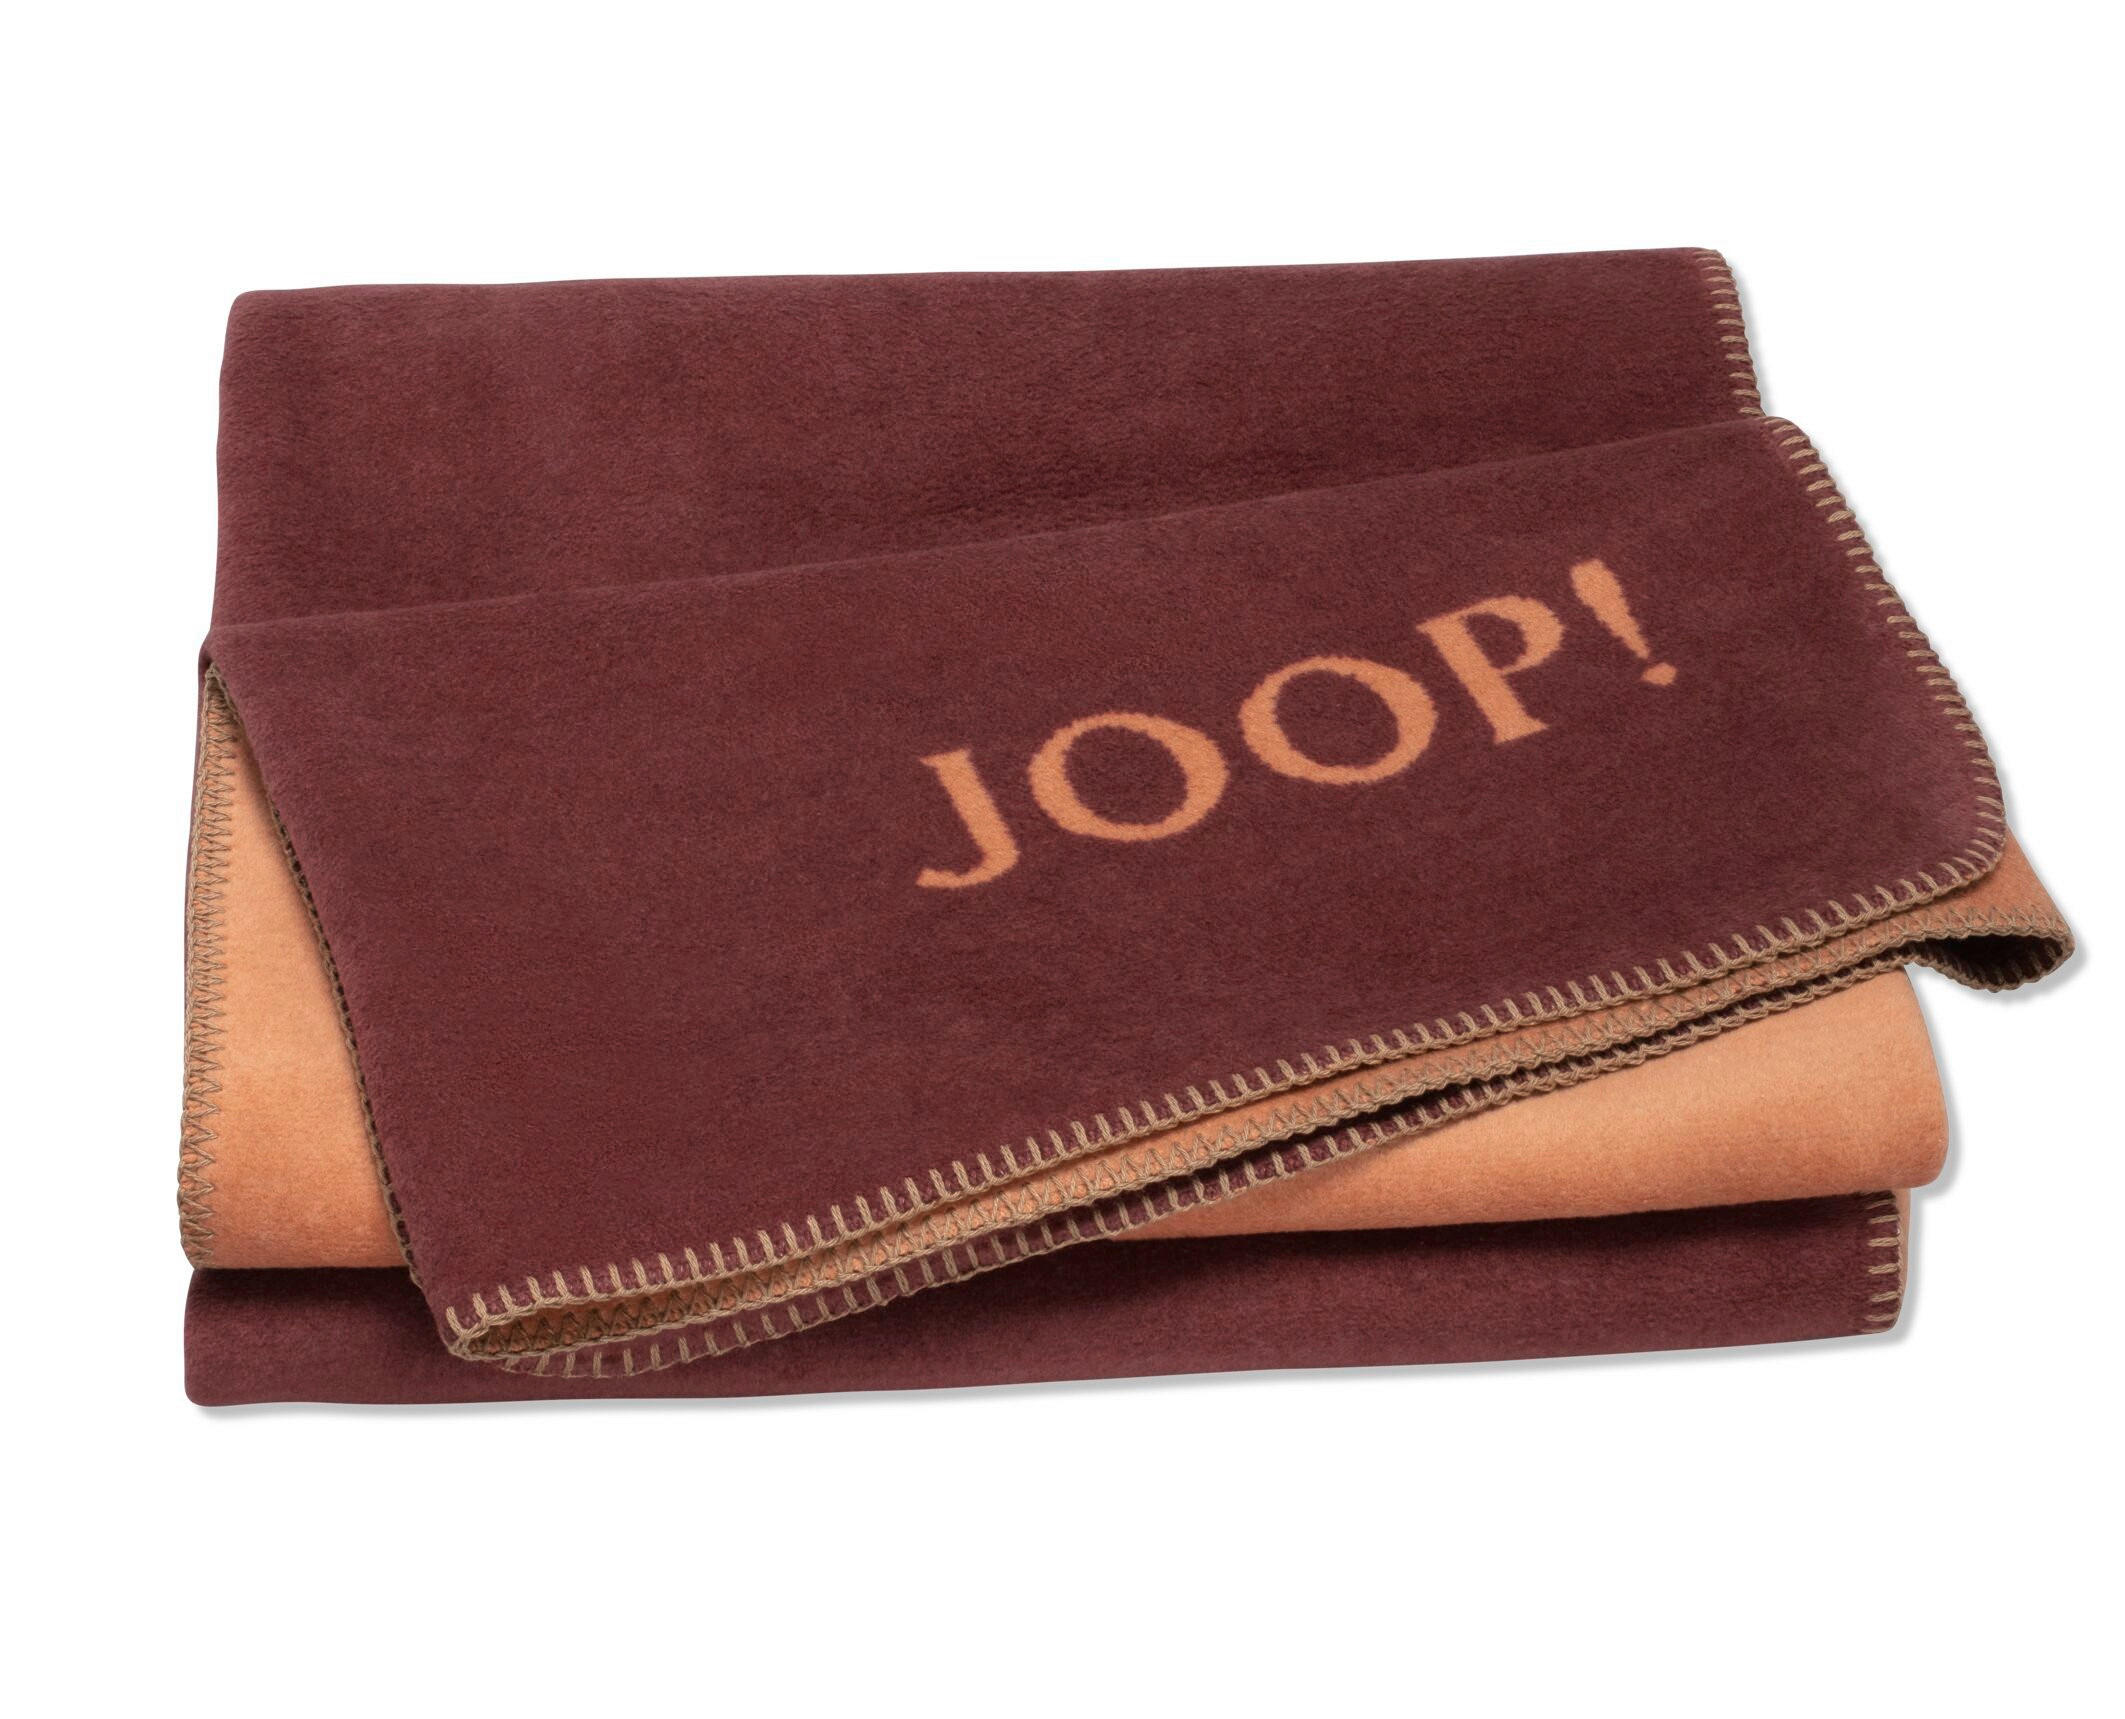 WOHNDECKE Uni Doubleface 150/200 cm  - Dunkelrot/Kupferfarben, Basics, Textil (150/200cm) - Joop!